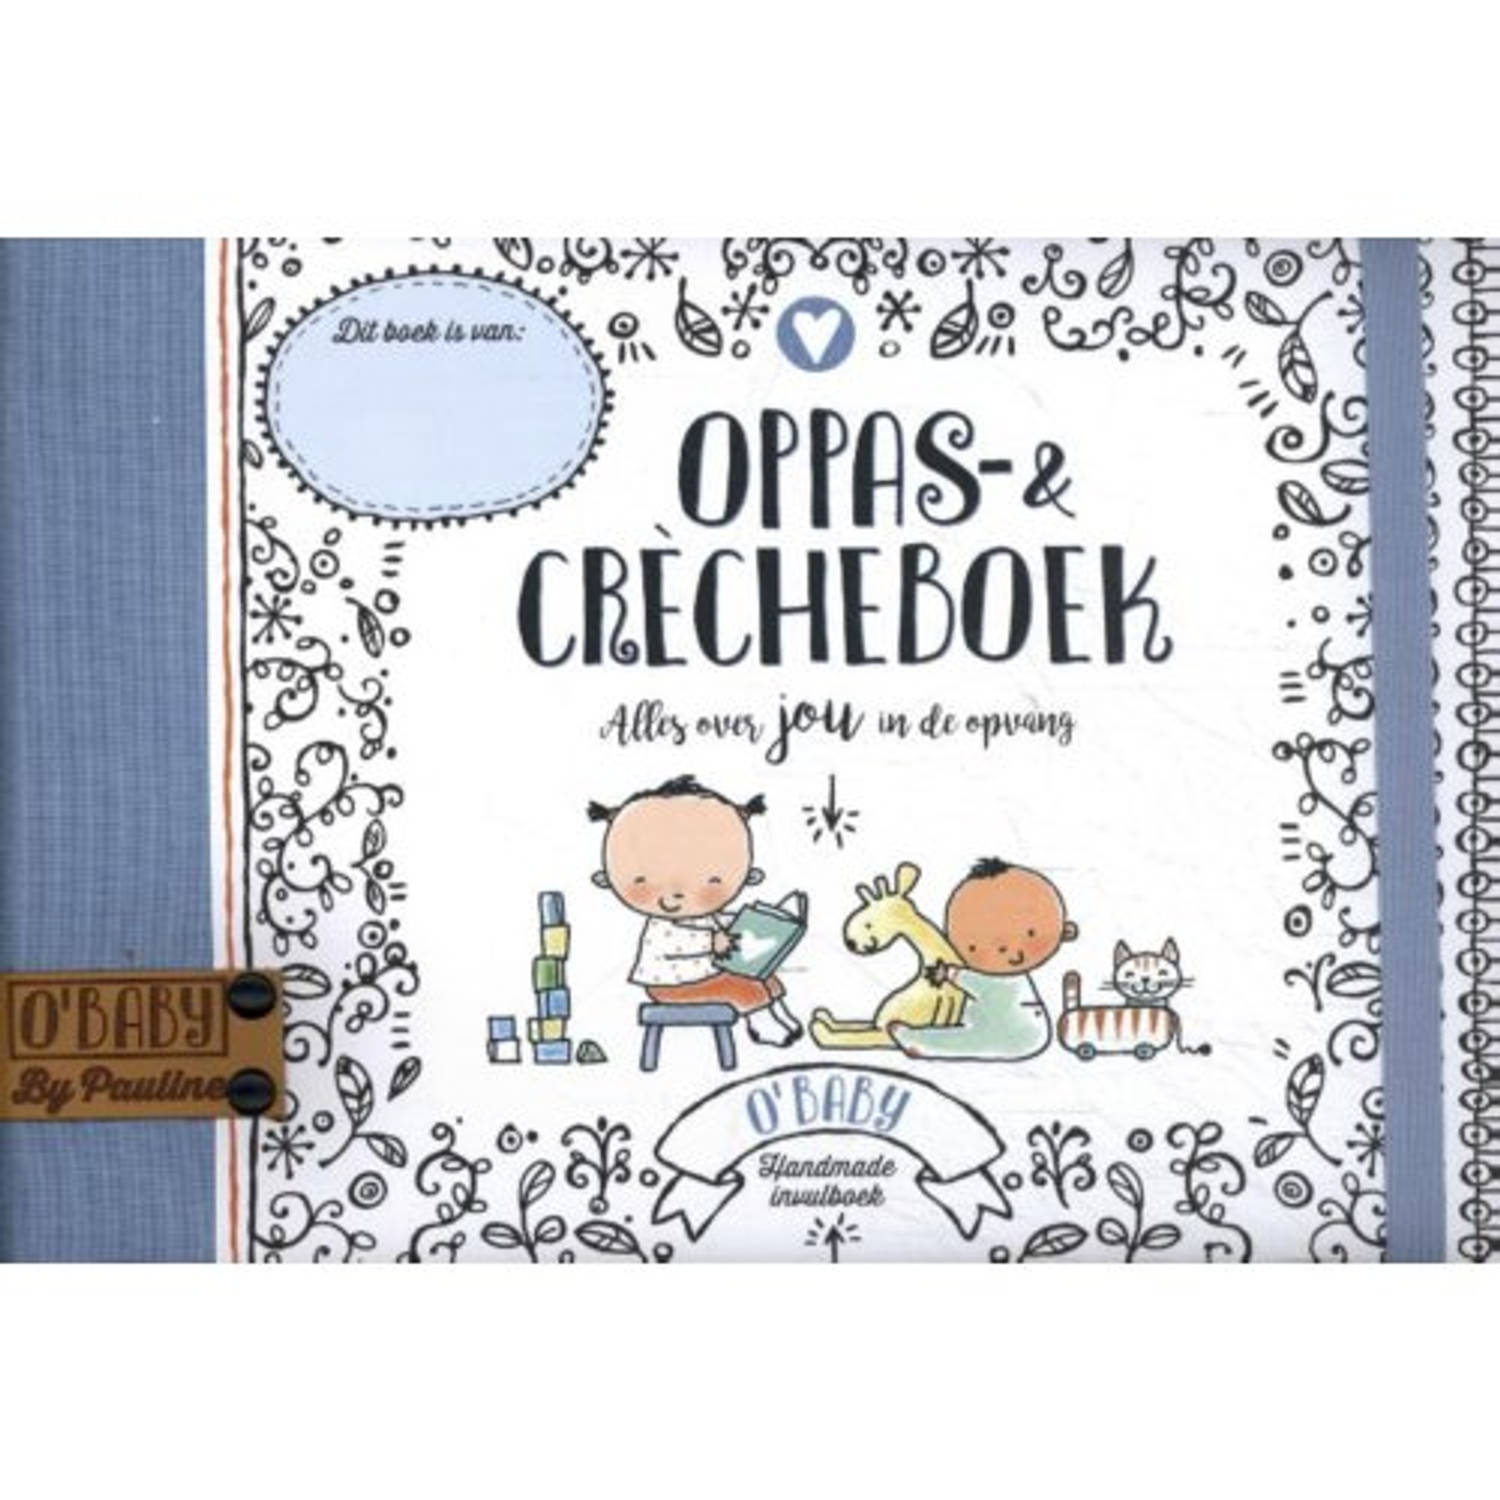 Oppas & Crècheboek - O'baby By Pauline